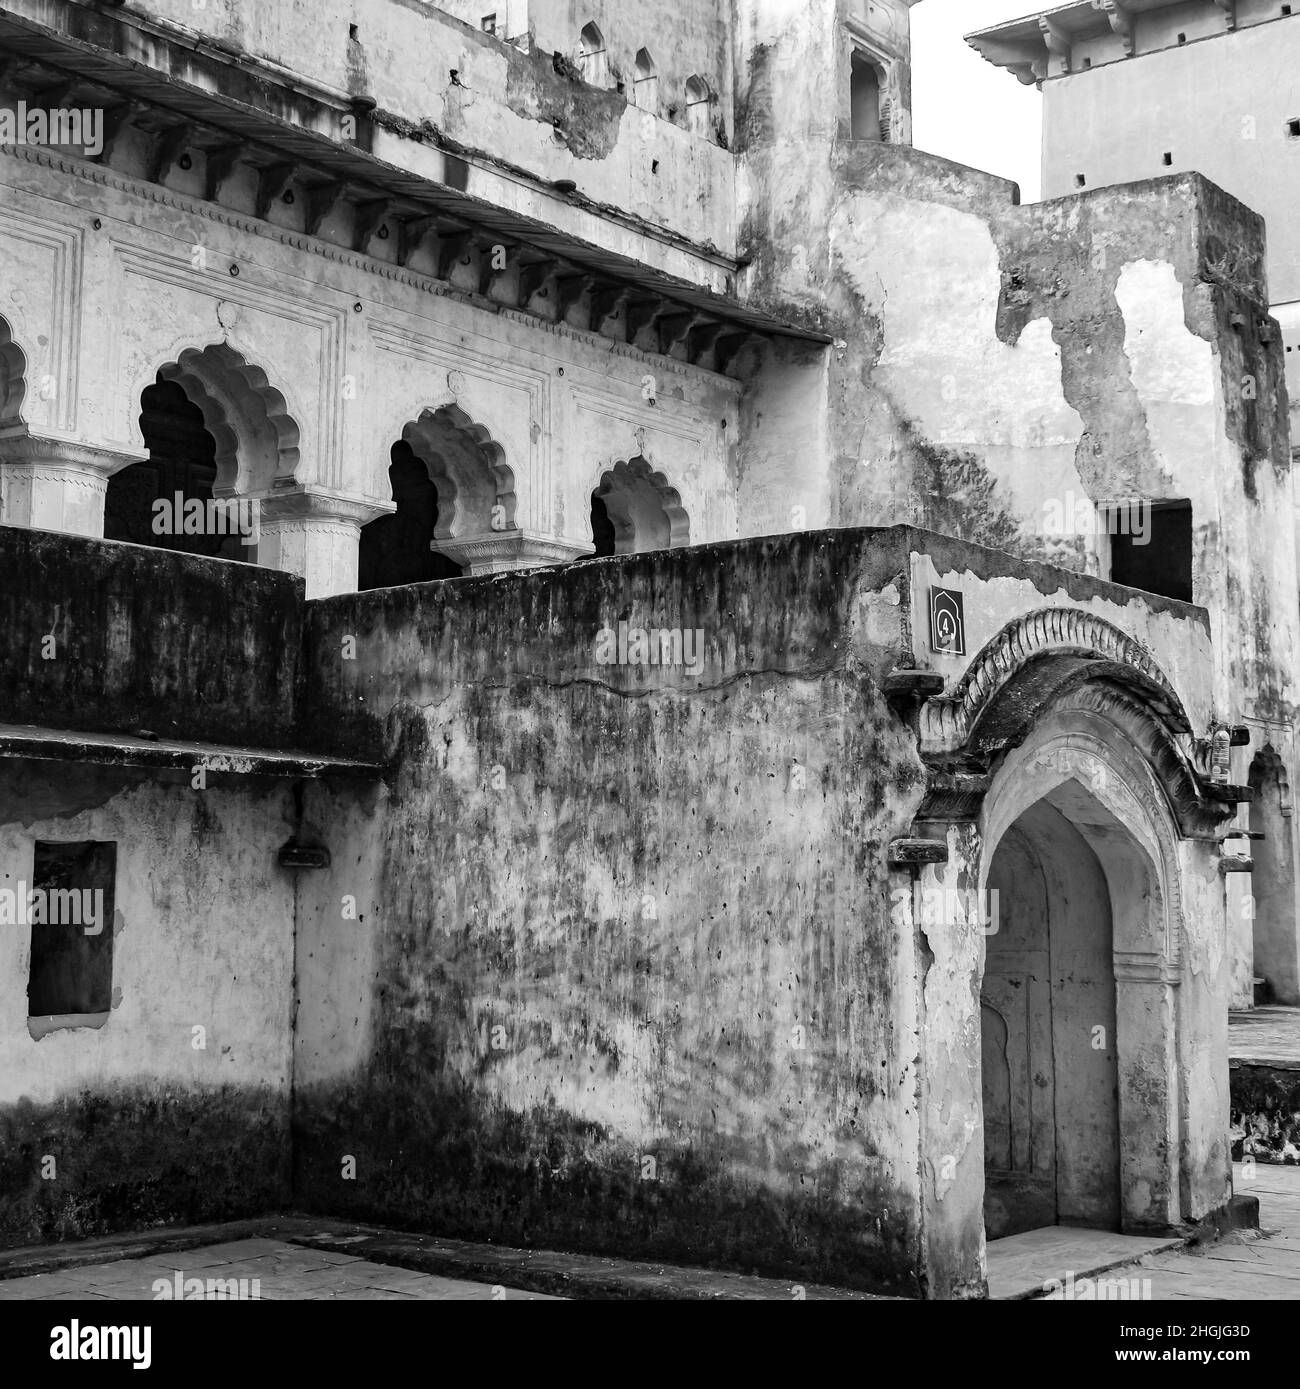 Jahangir Mahal (Orchha Fort) in Orchha, Madhya Pradesh, Indien, Jahangir Mahal oder Orchha Palace ist Zitadelle und Garnison in Orchha. Madhya Prade Stockfoto